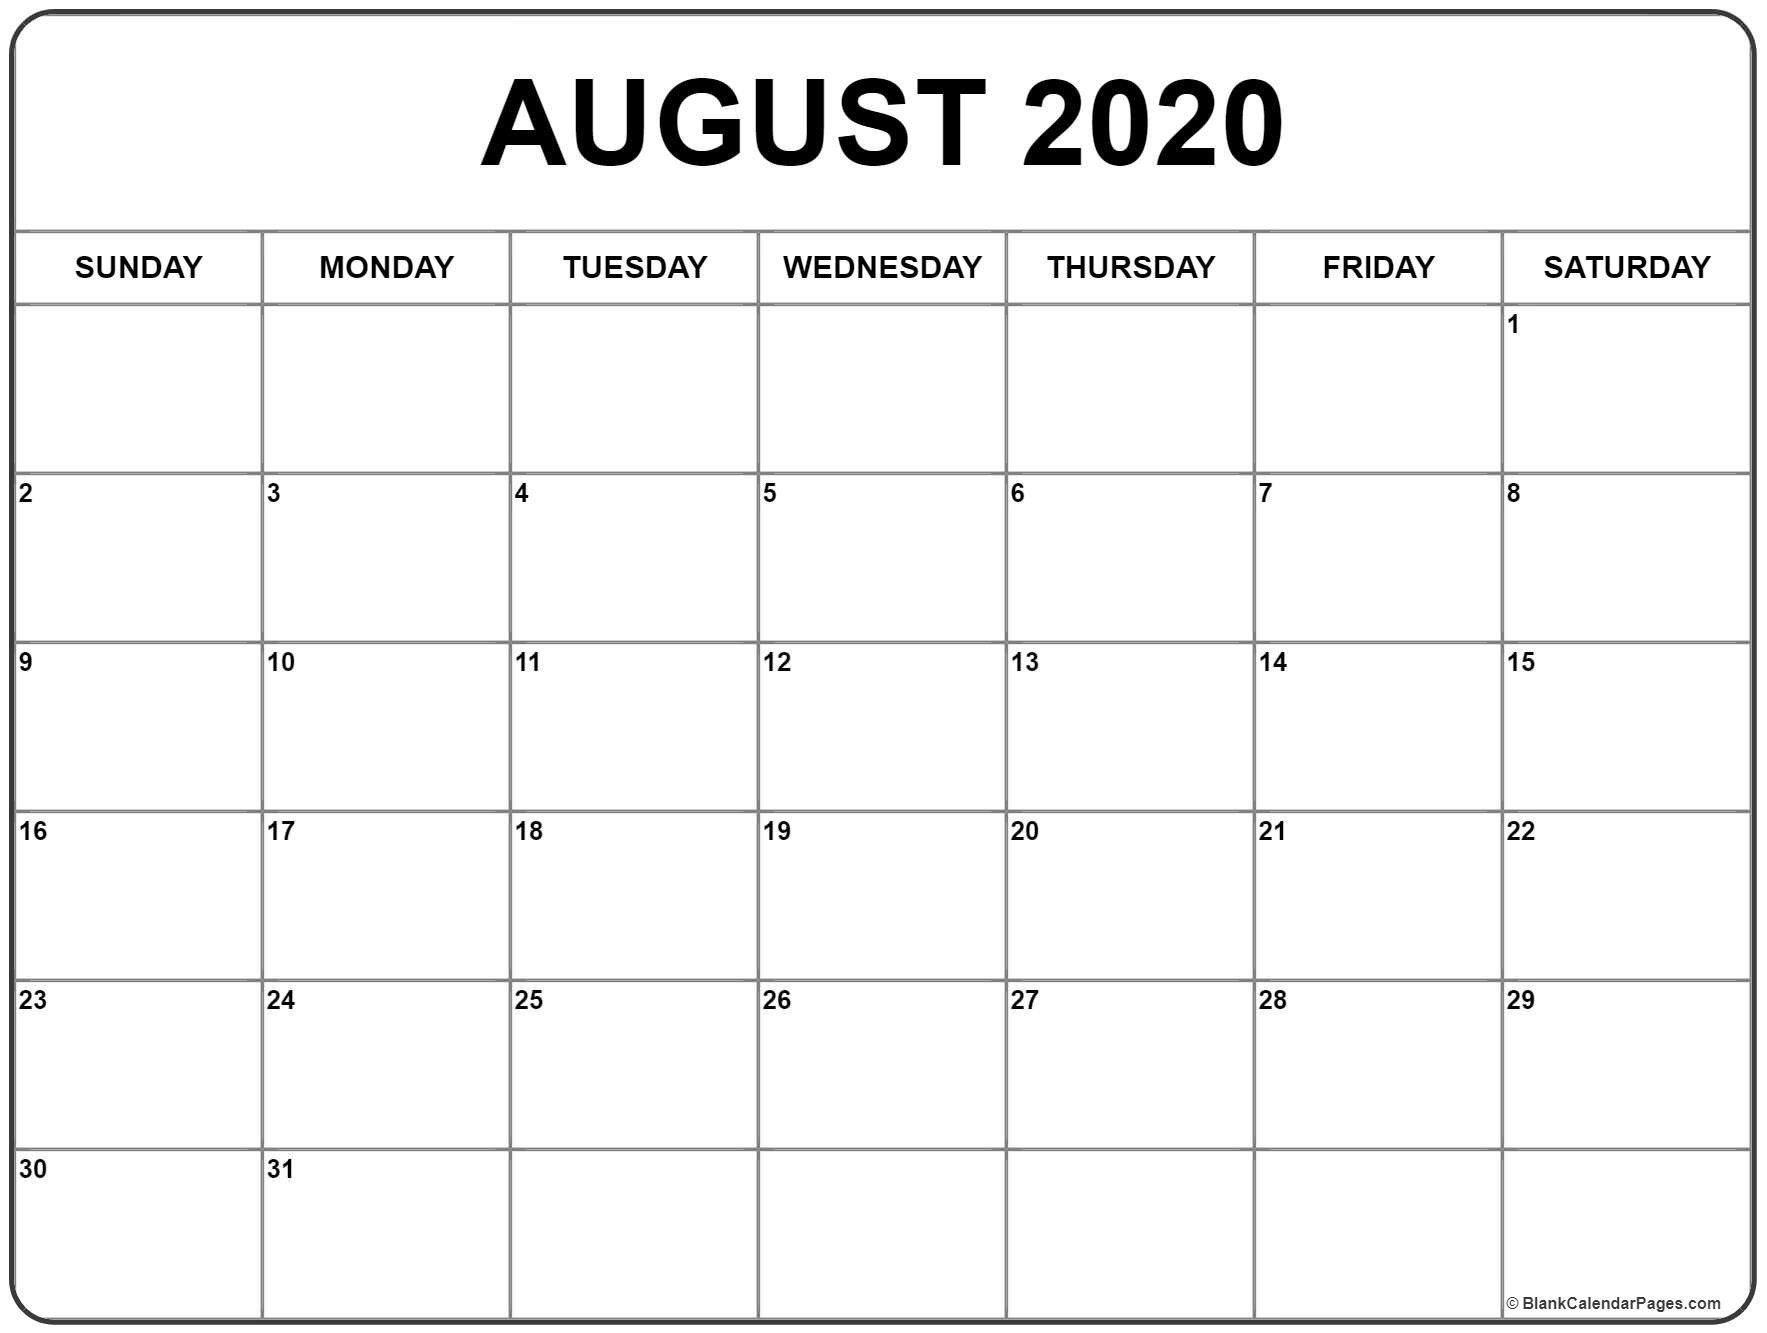 August 2020 Calendar | Free Printable Monthly Calendars-Blank Calendar For August 2020/monday-Friday